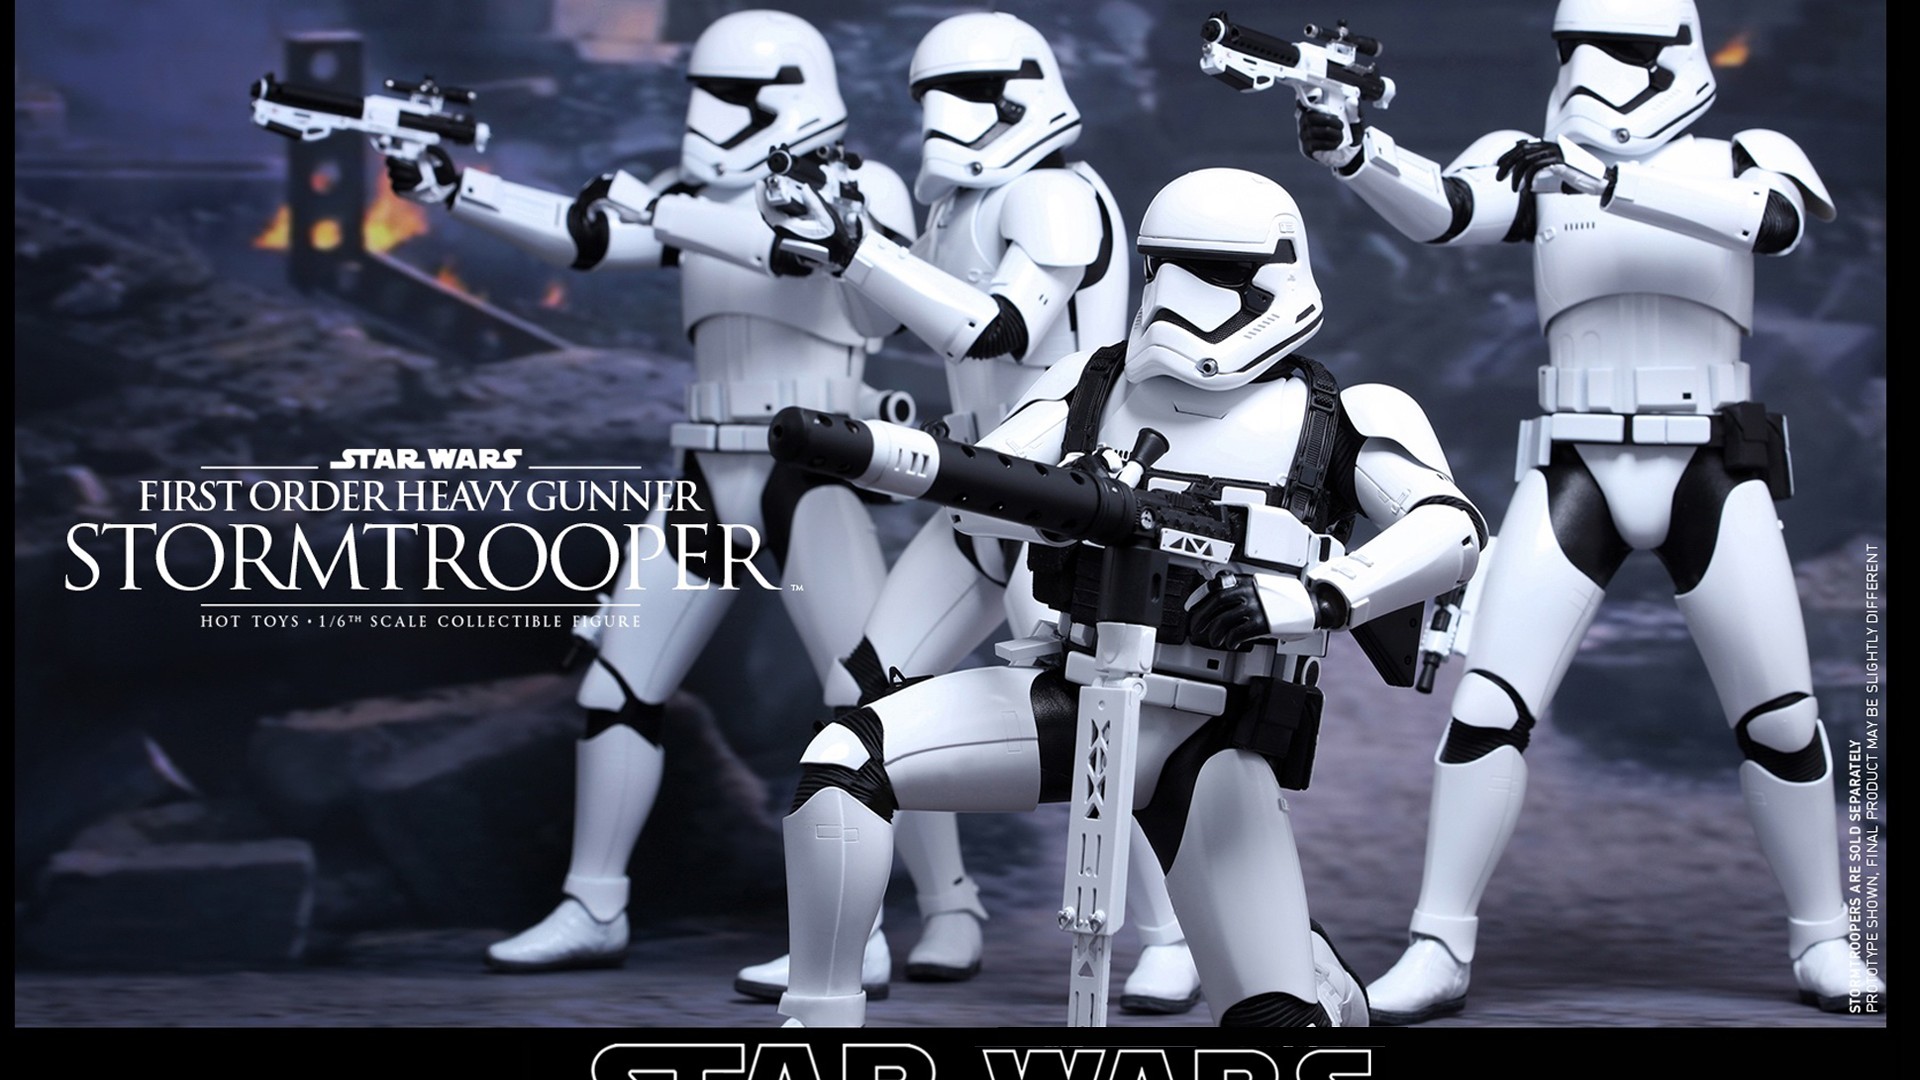 Star Wars First Order Stormtrooper Models Soldiers Widescreen Free Download, Wallpaper13.com